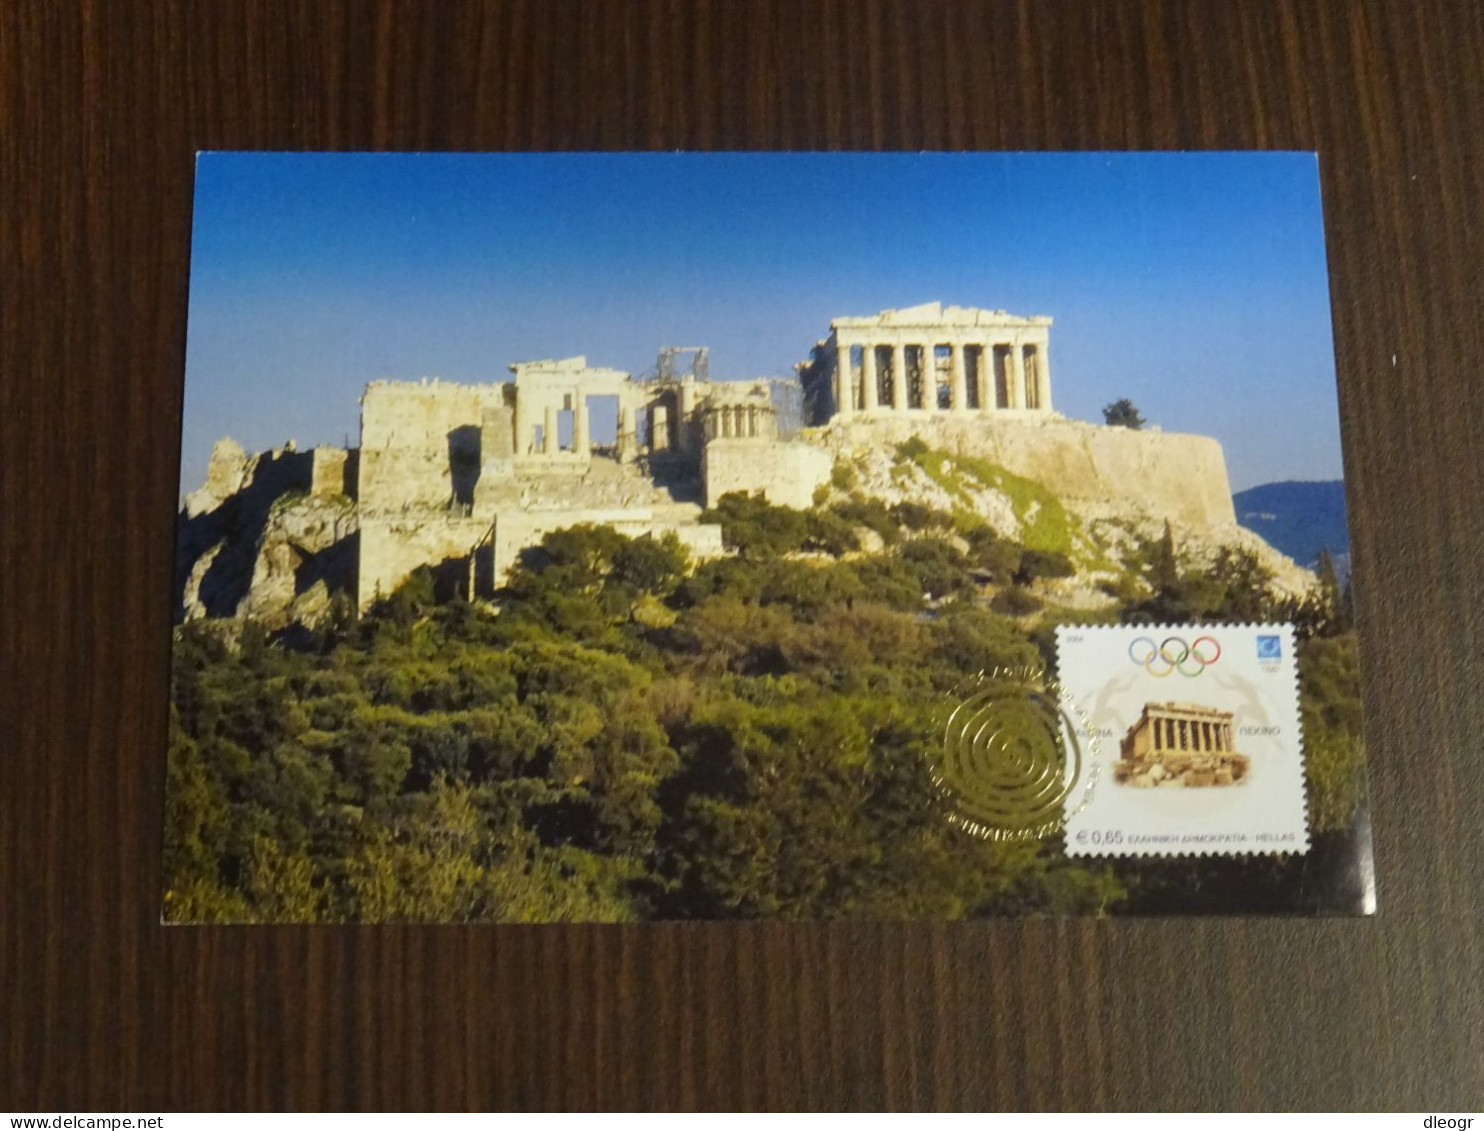 Greece 2004 Athens 2004 Beijing Maximum Card VF - Maximum Cards & Covers